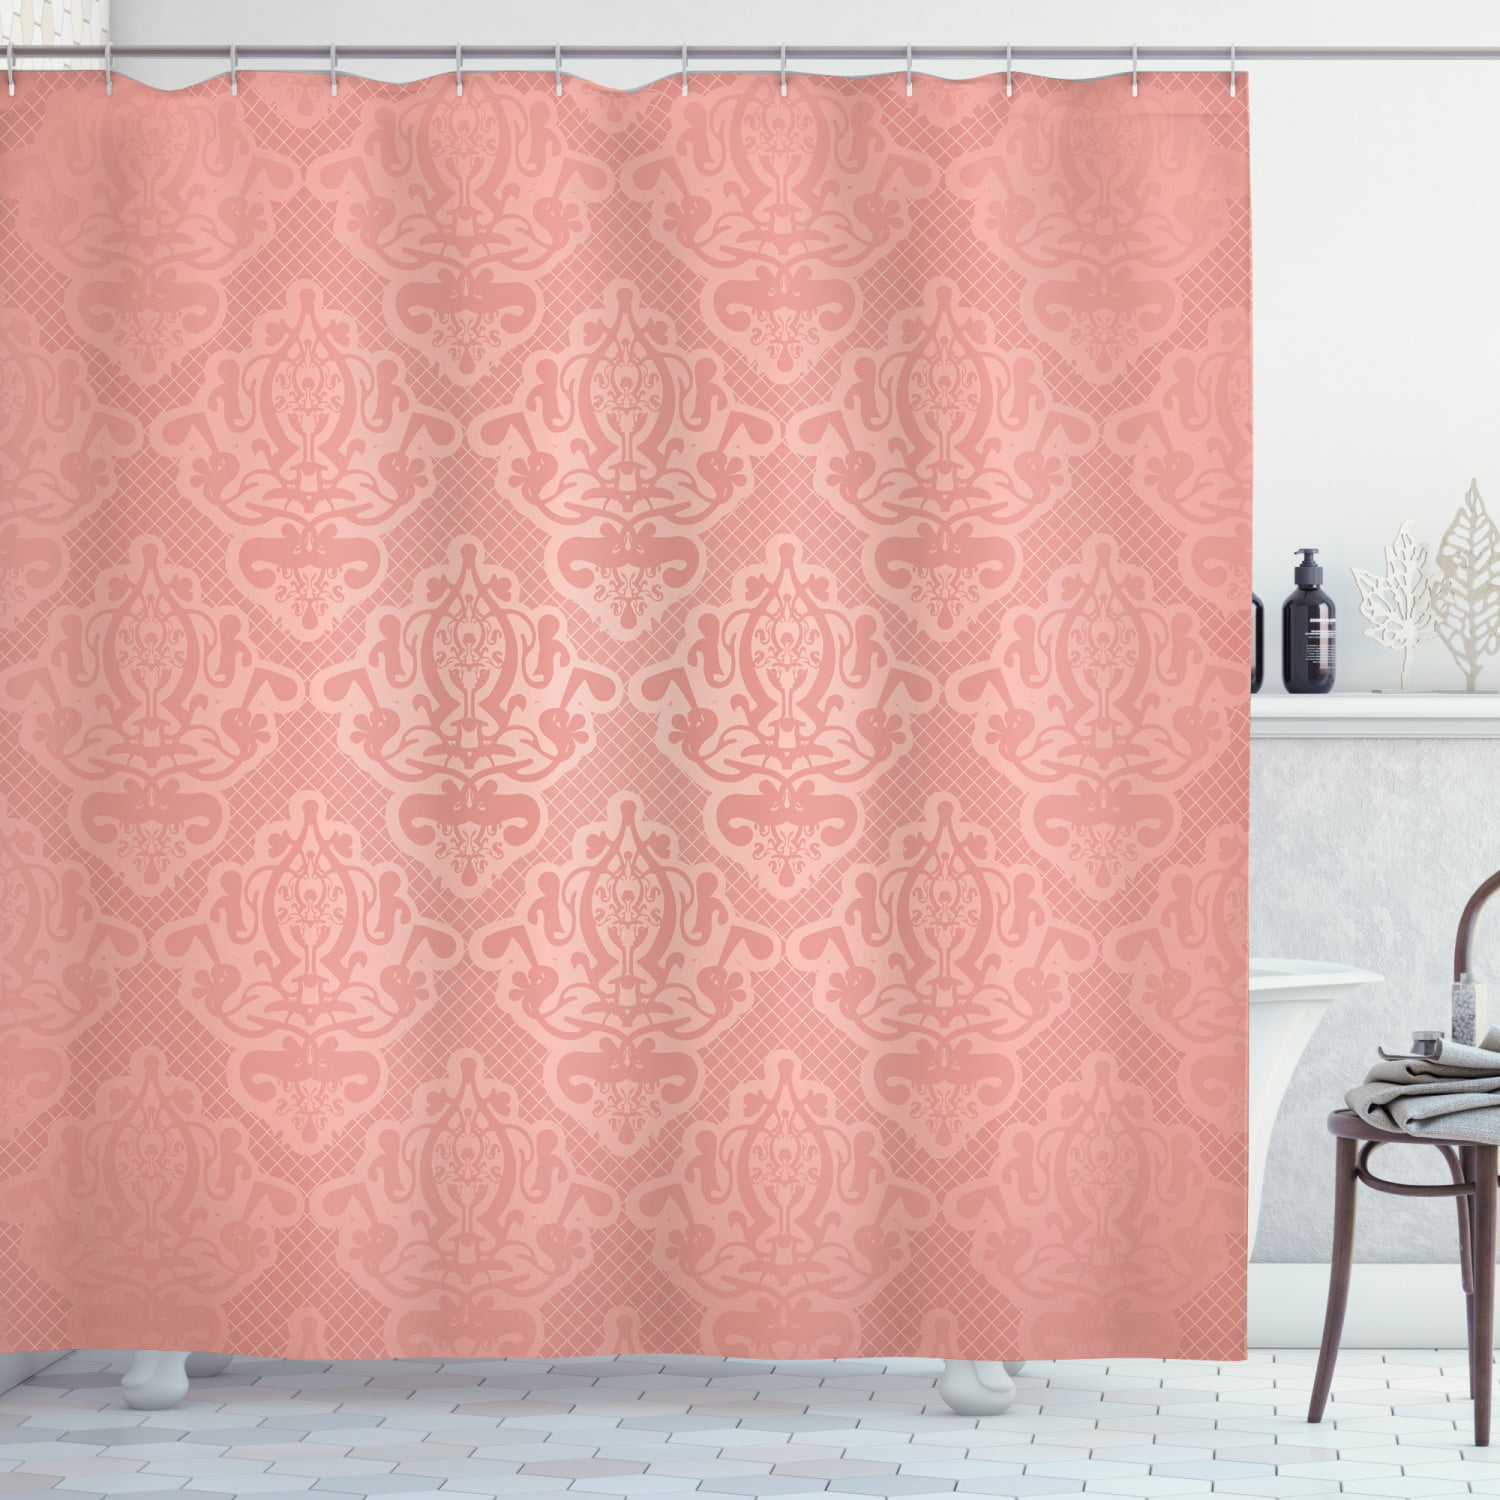 Antique Style Floral Fabric Shower Curtain Vintage Bath 70 x 72 Style Bathroom 